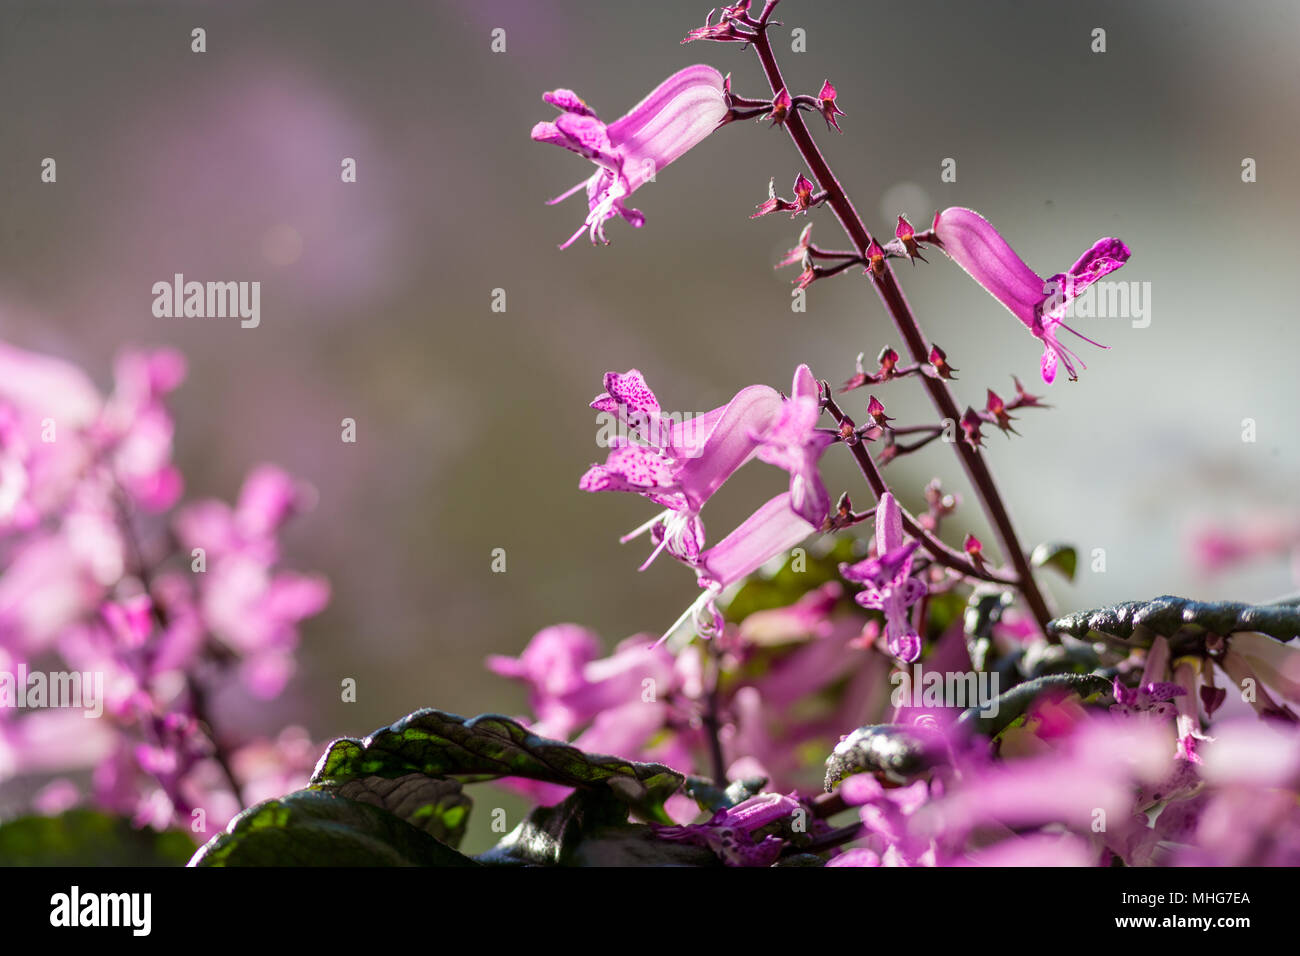 Silverleaf spurflower, Novemberljus (Plectranthus oertendahlii) Stock Photo